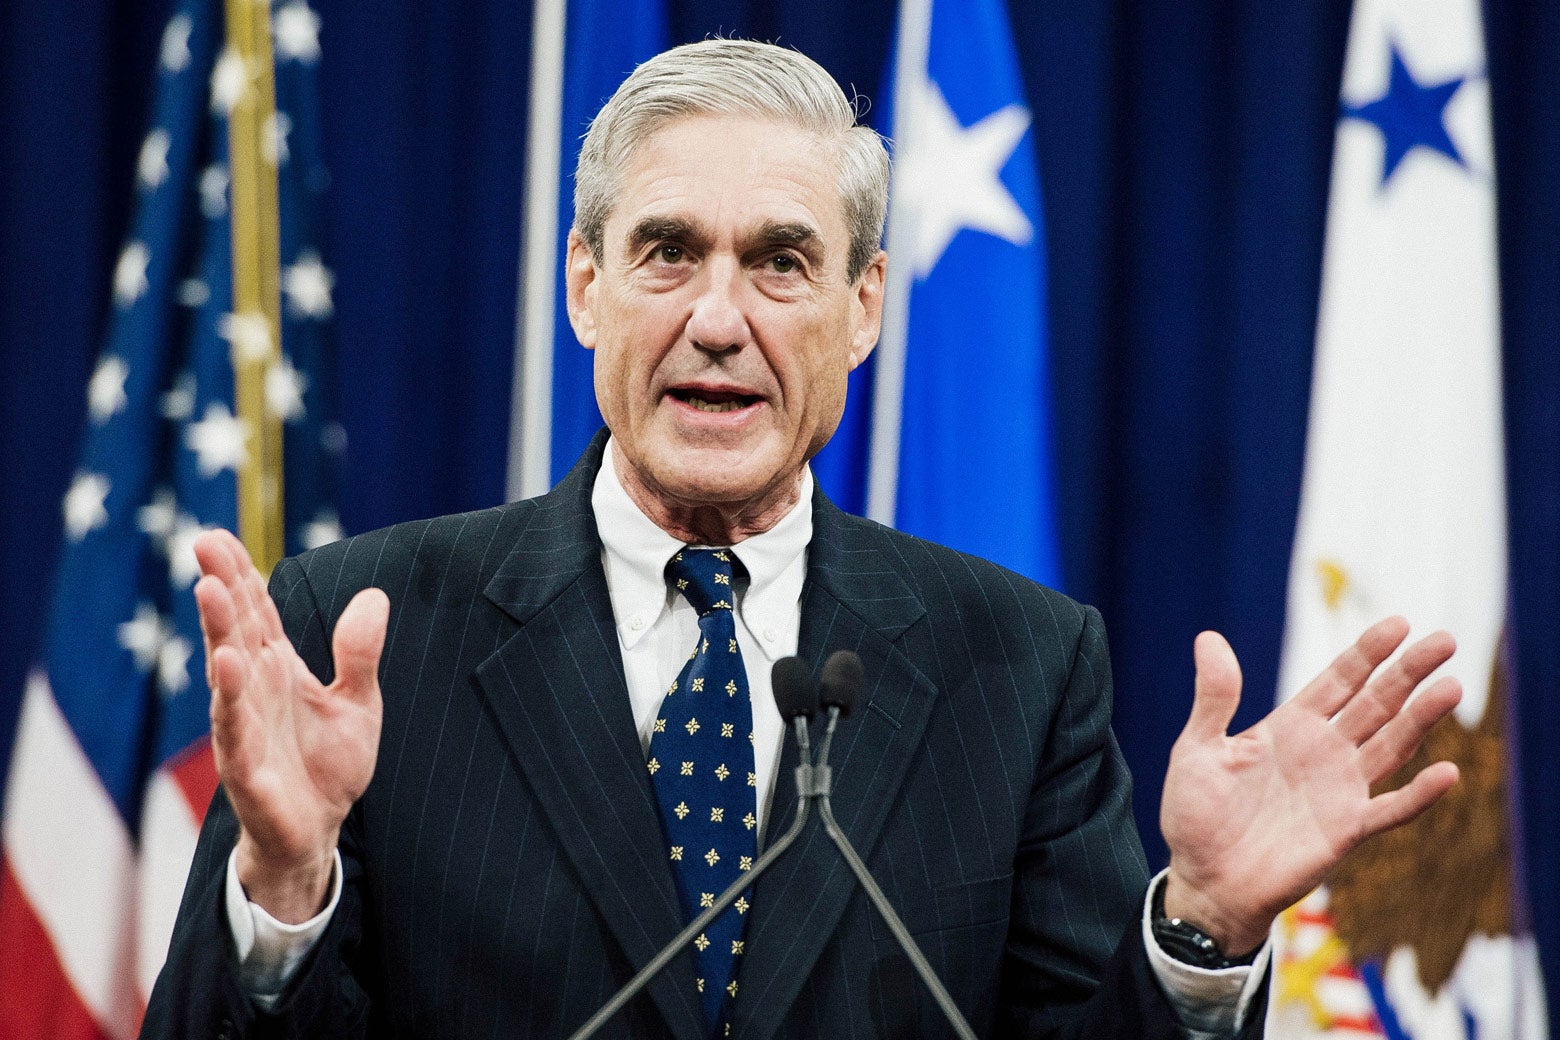 Robert Mueller, as seen in this 2013 photo during his tenure as FBI director.